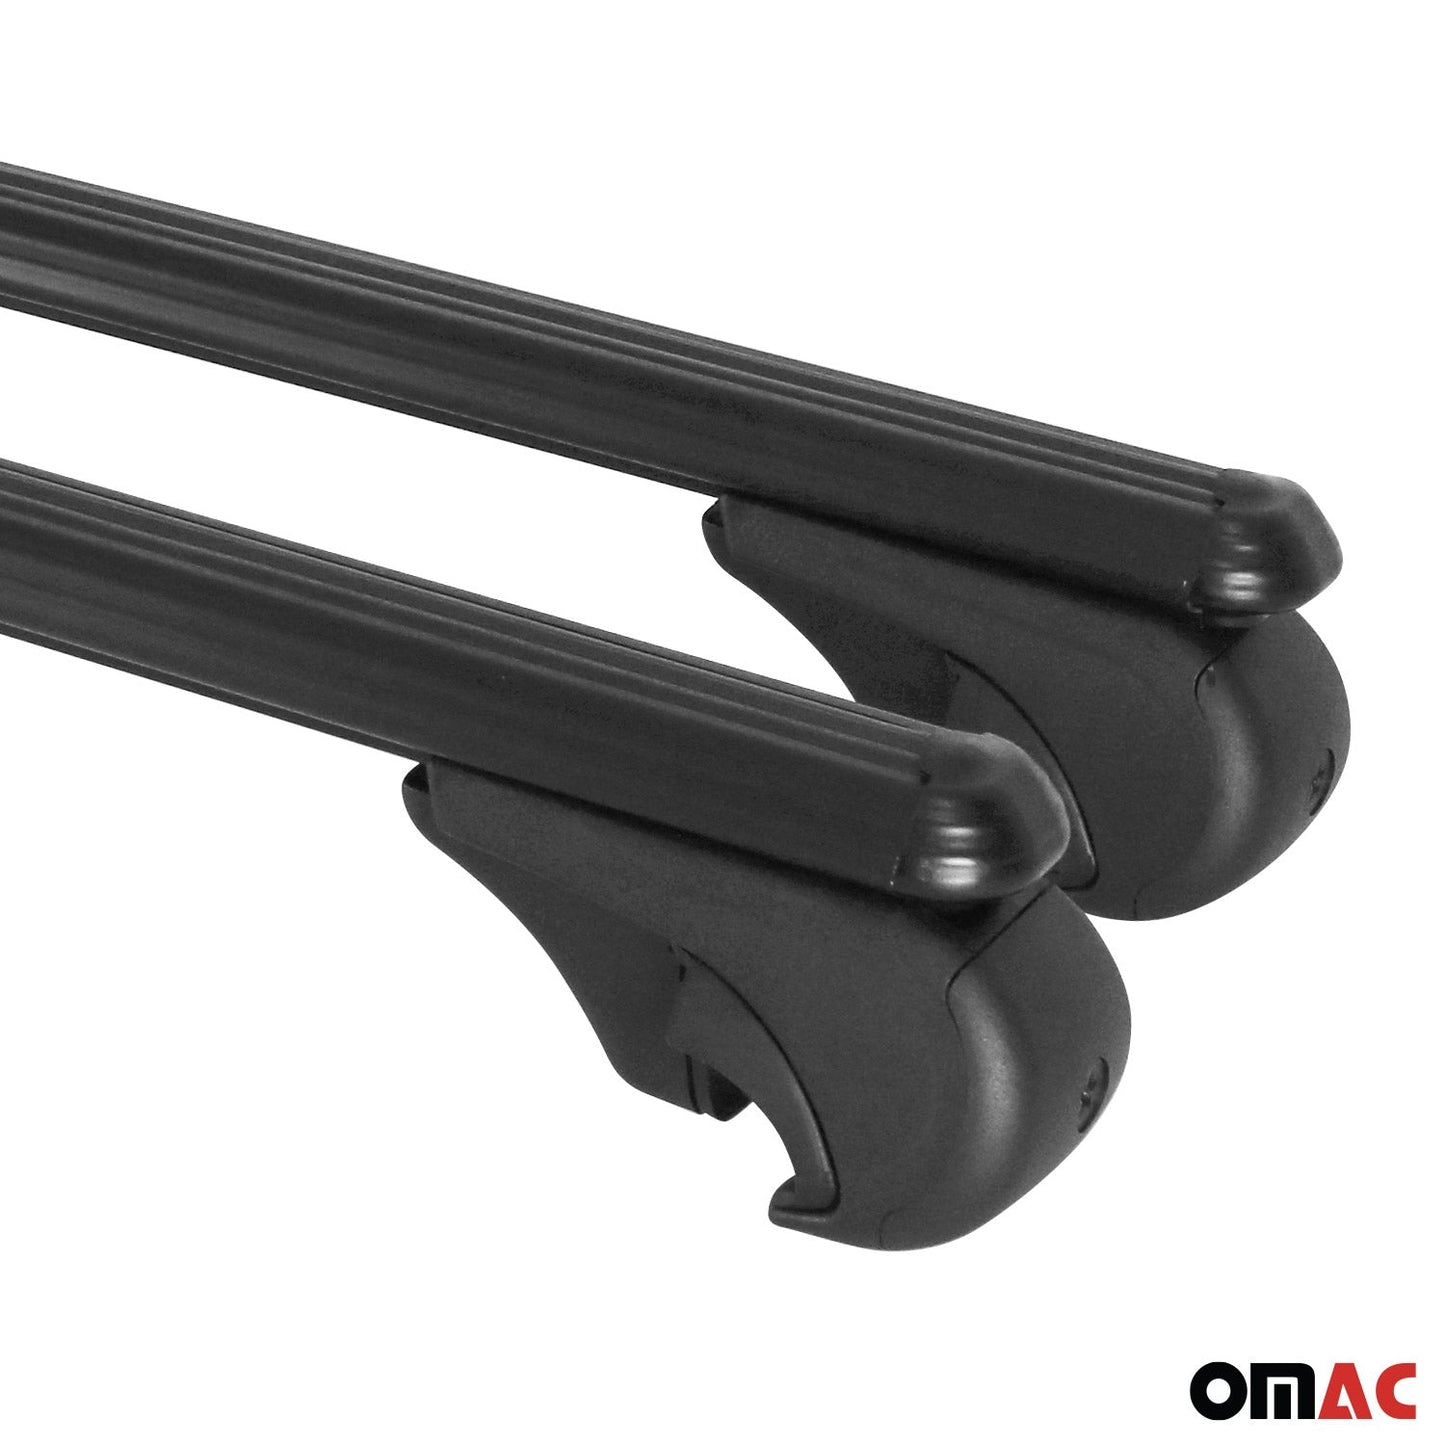 OMAC Lockable Roof Rack Cross Bars Carrier for Hyundai Santa Fe 2001-2006 Black 32059696929MB